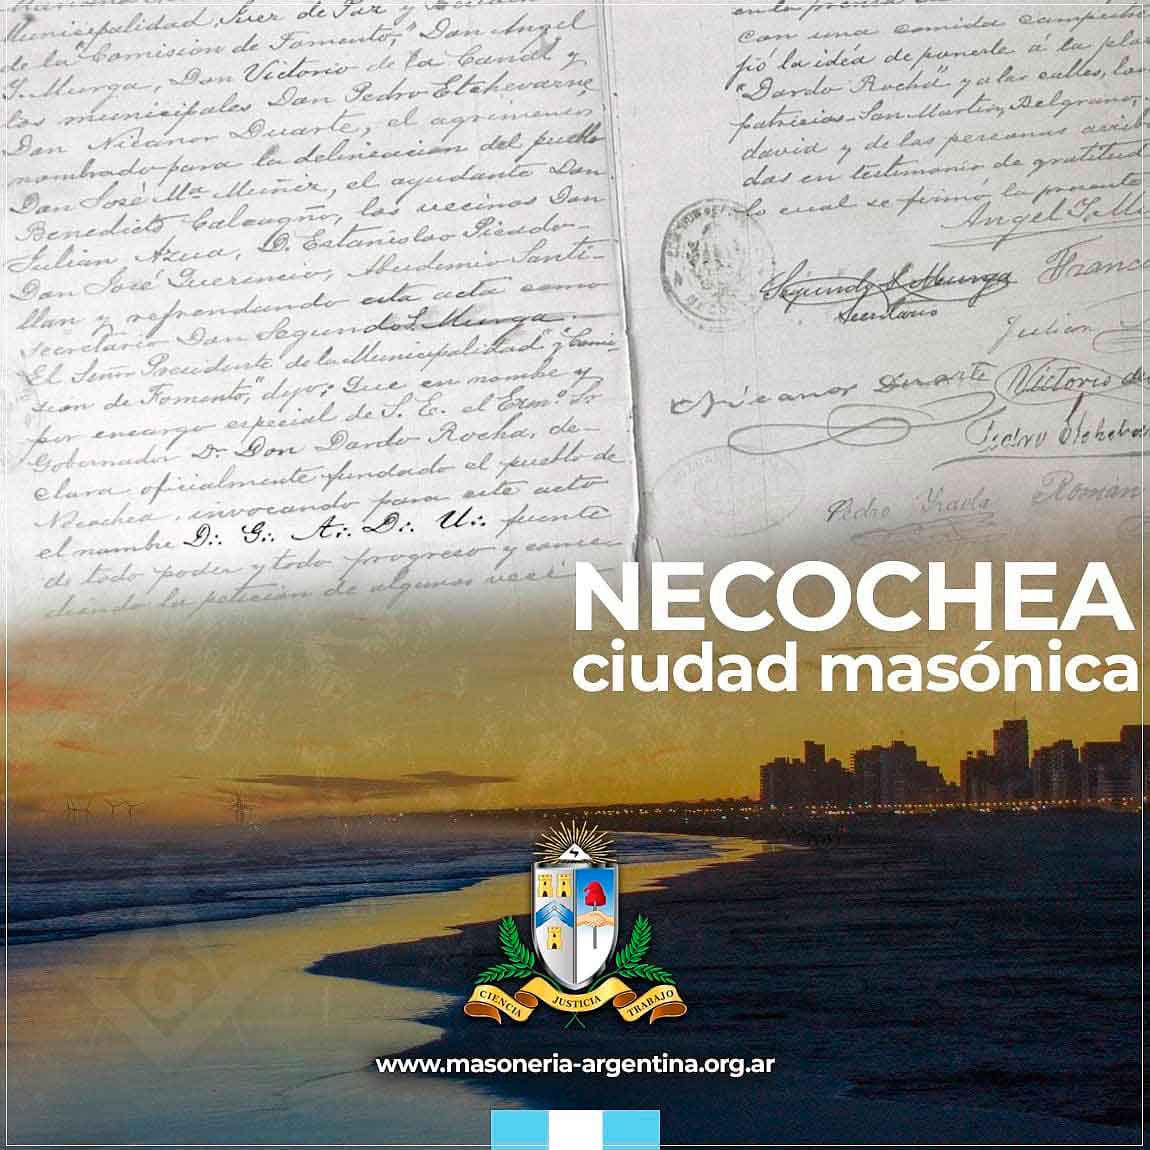 Read more about the article Necochea, ciudad masónica